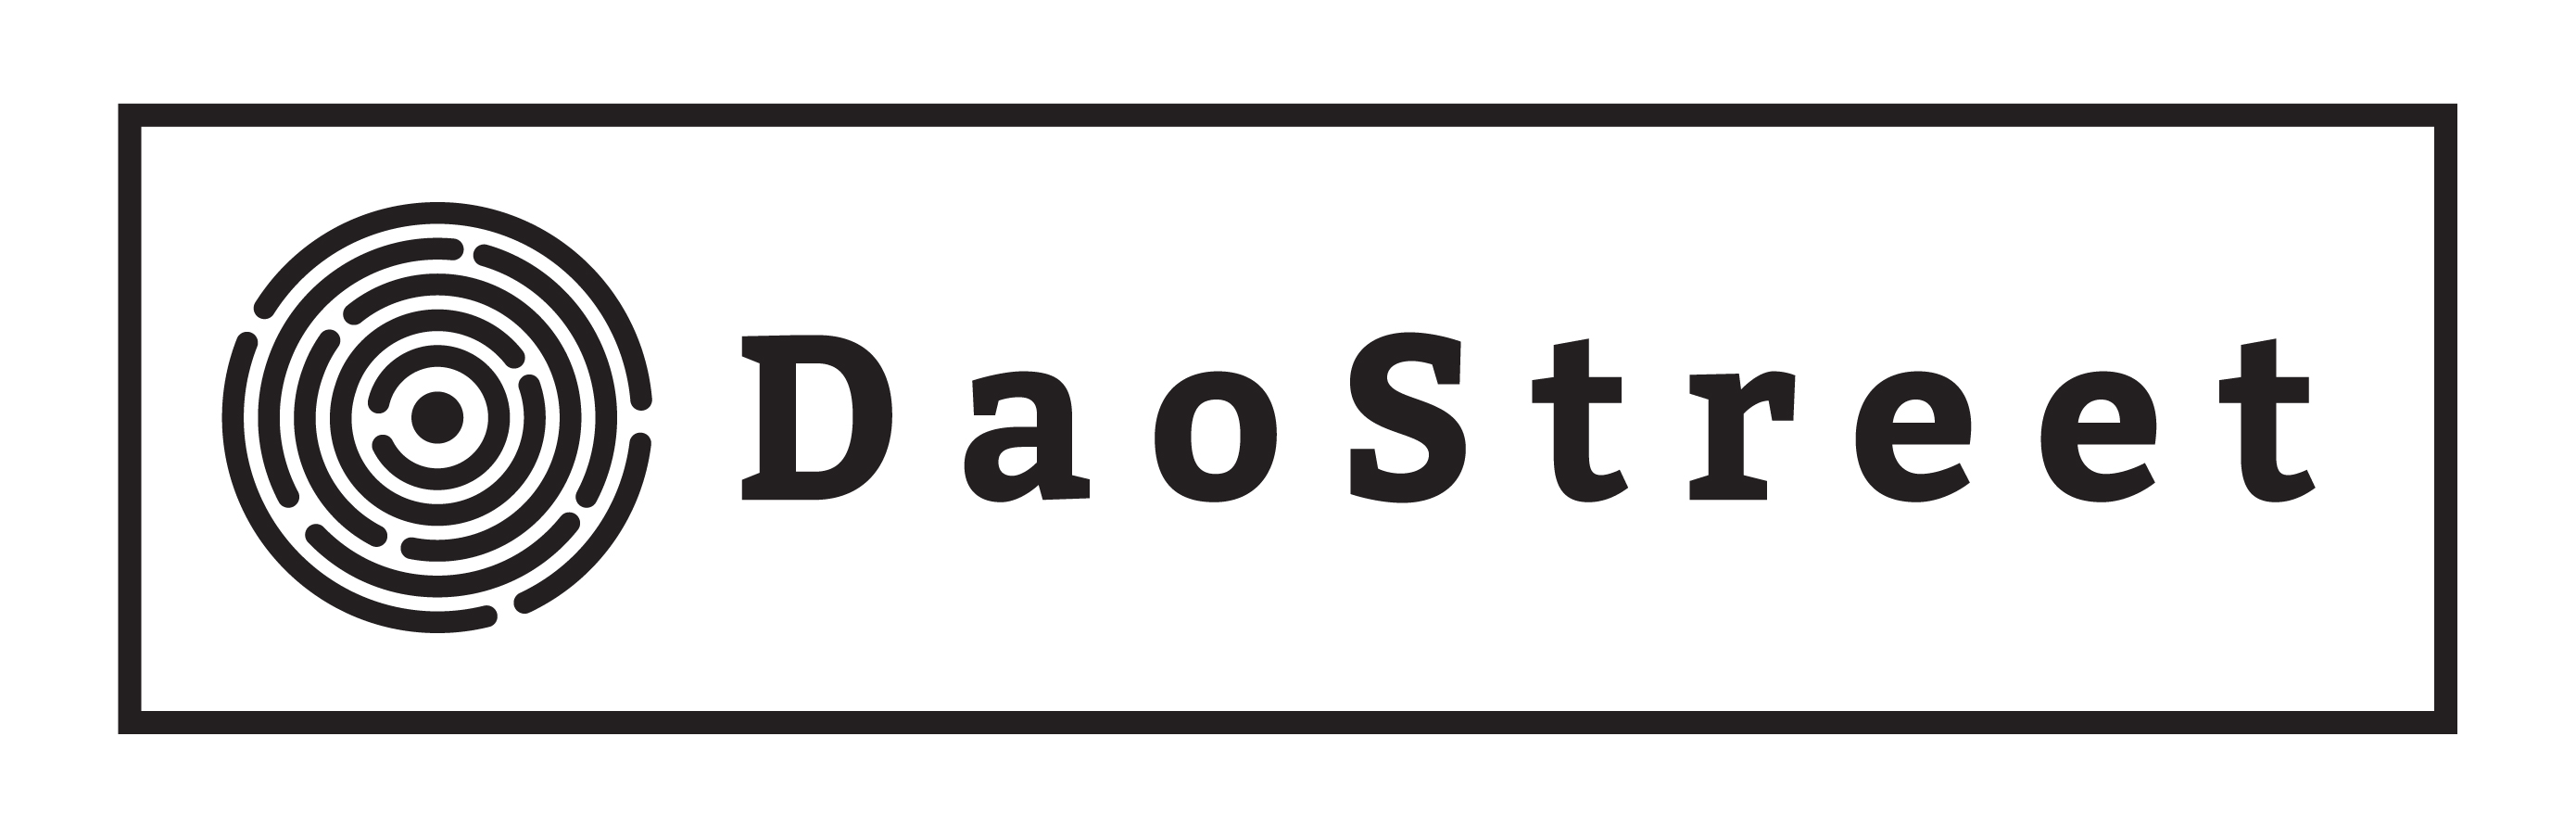 DaoStreet Logo-Rectangle.jpg